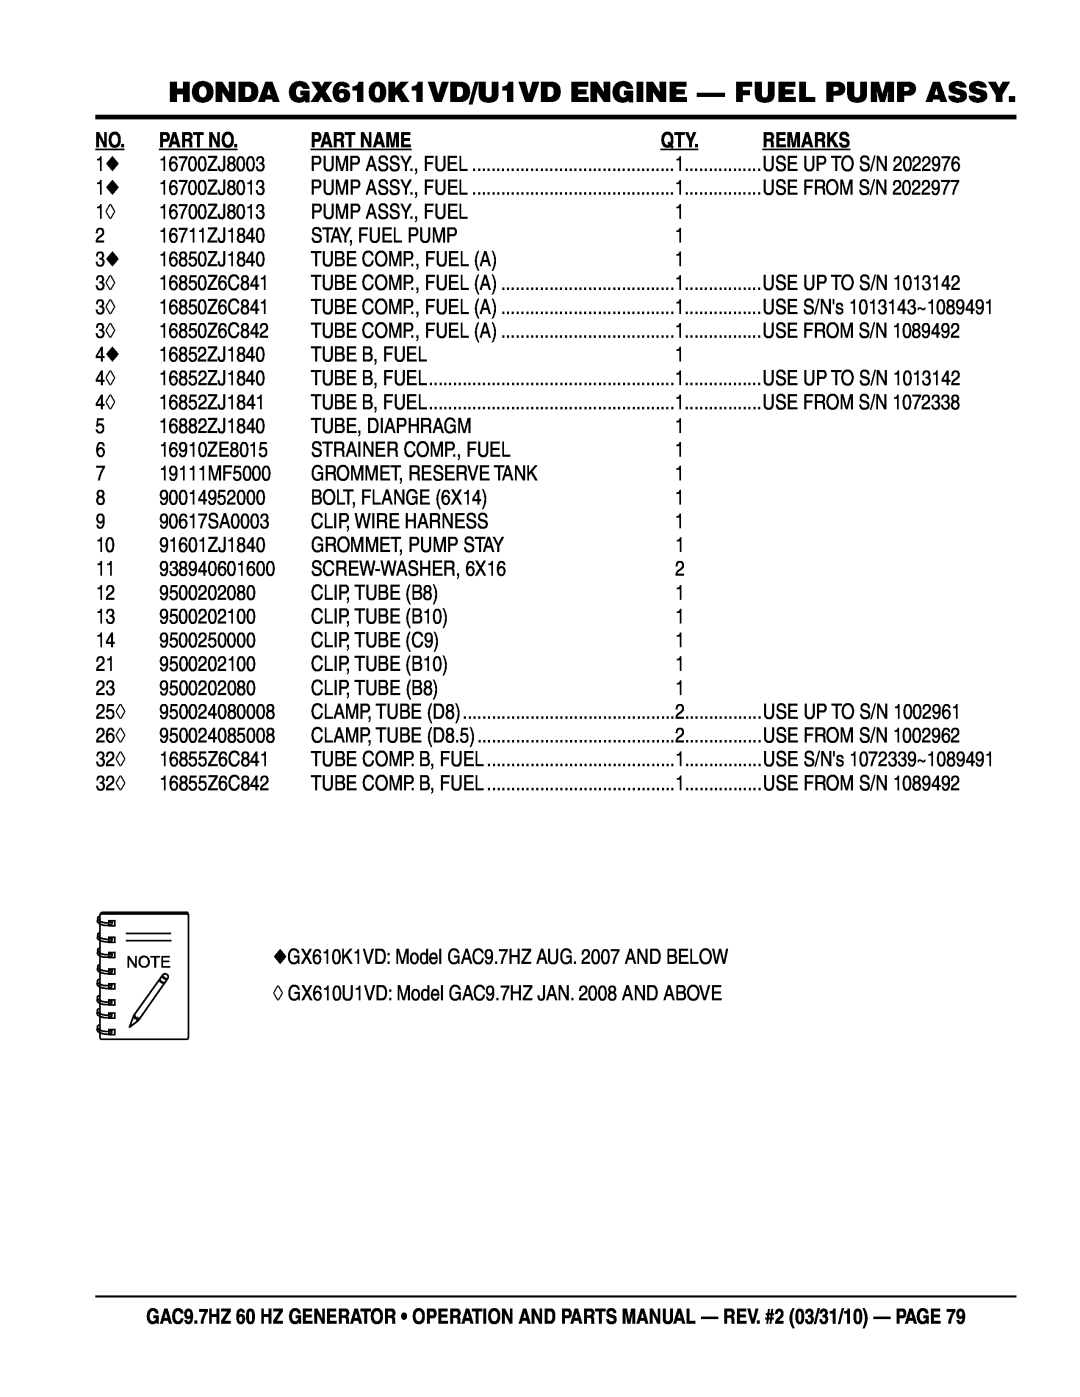 Multiquip GAC-9.7HZ manual HONDA GX610K1VD/U1VD ENGINE - FUEL PUMP ASSY, Part Name, Remarks, USE S/Ns 1013143~1089491 